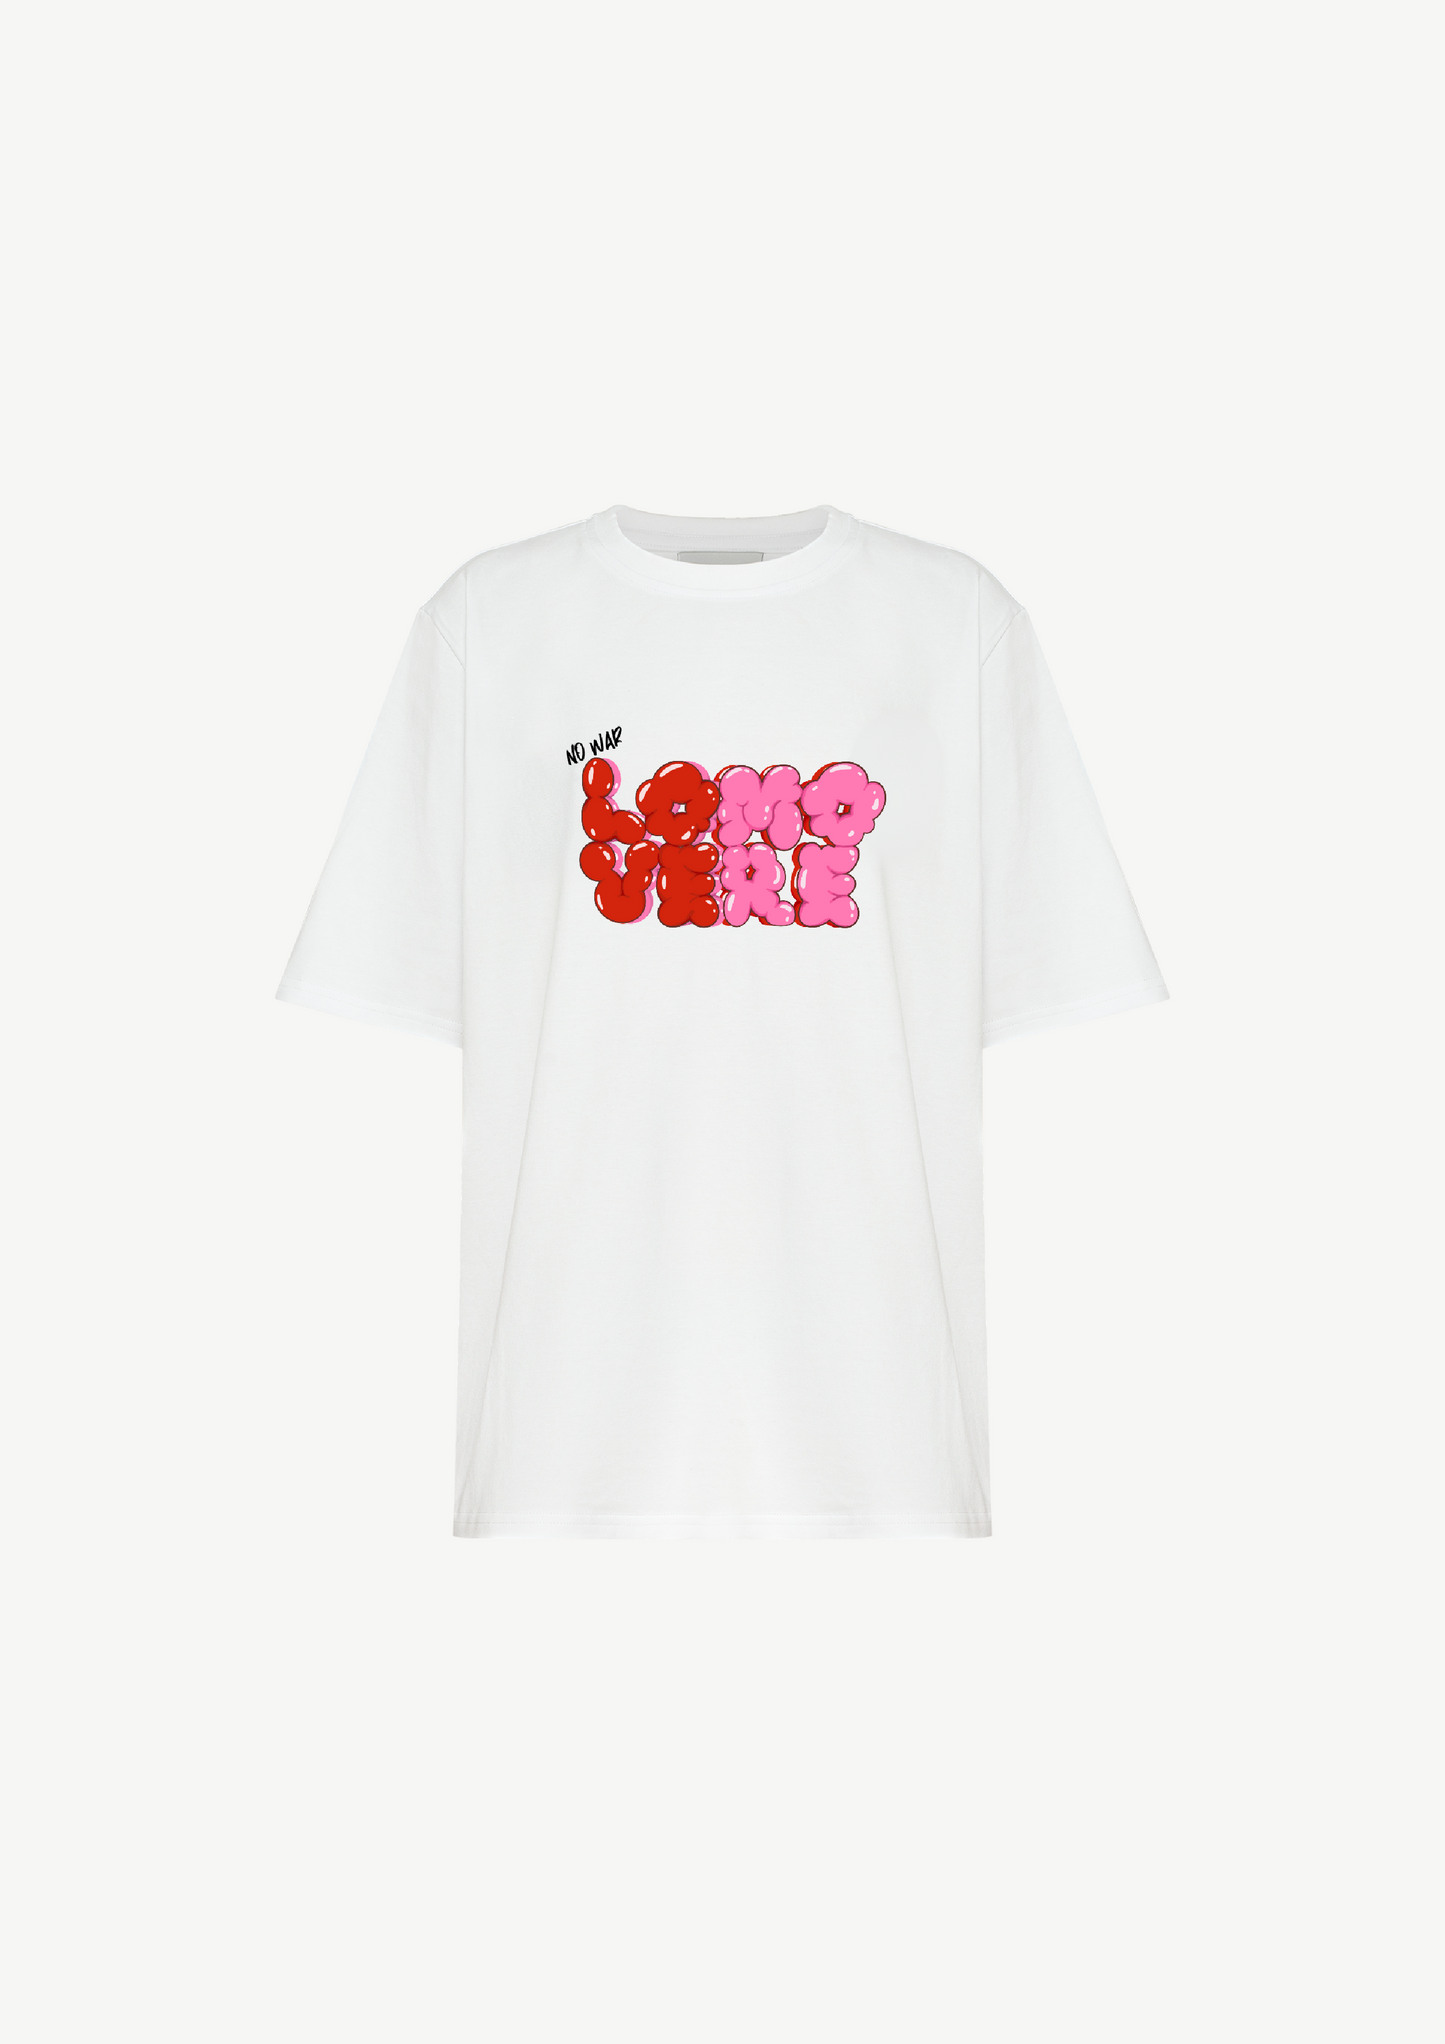 "Love More" T-shirt